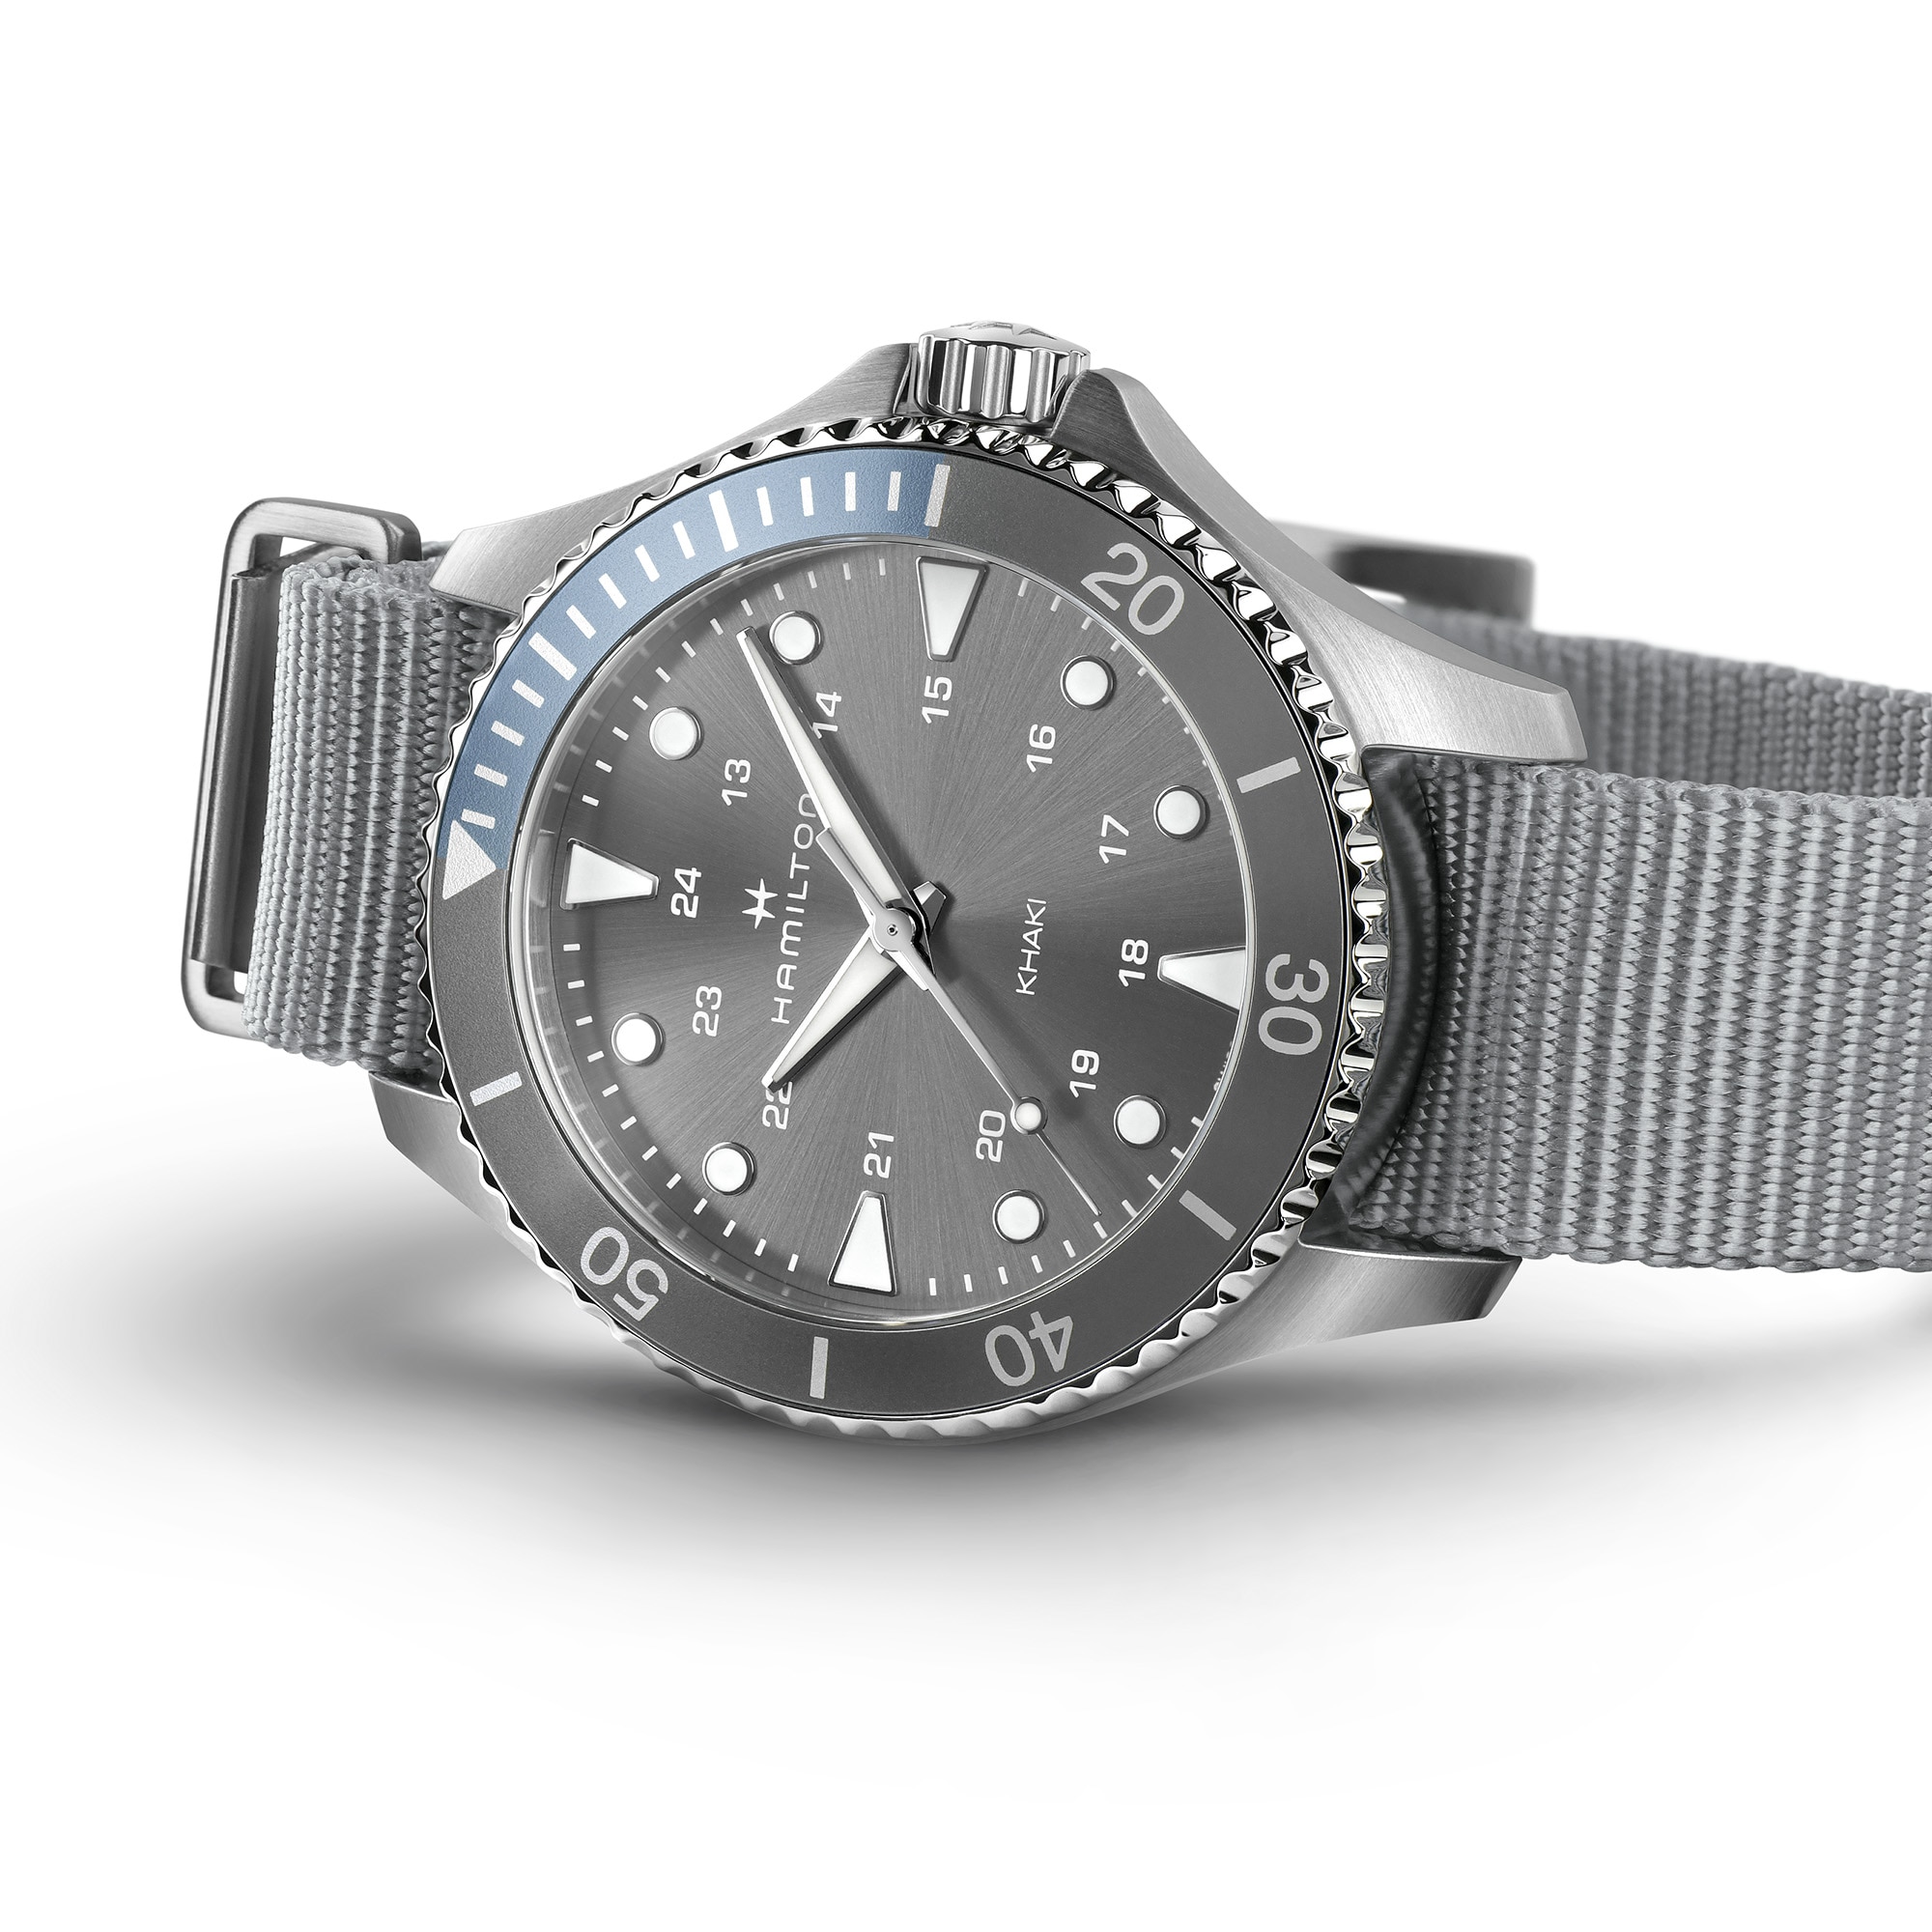 Quartz Navy | Hamilton Watch - Scuba | Hamilton H82211981 Khaki Watch